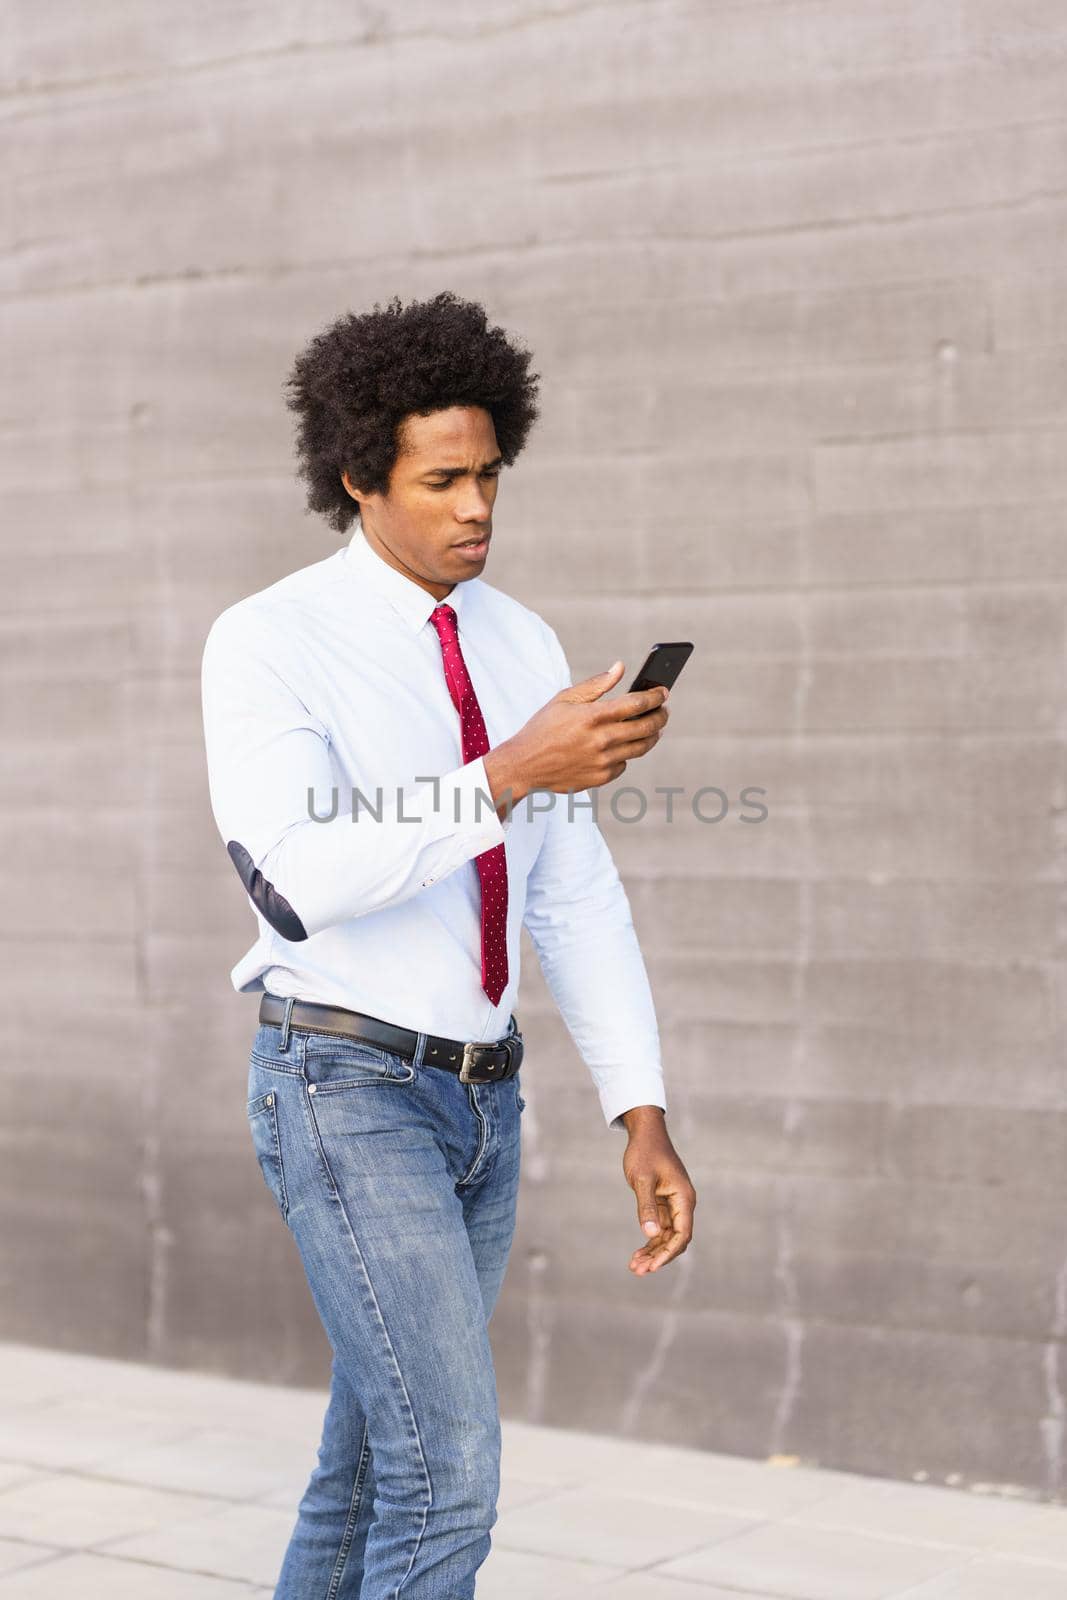 Black Businessman using his smartphone walking down the street.